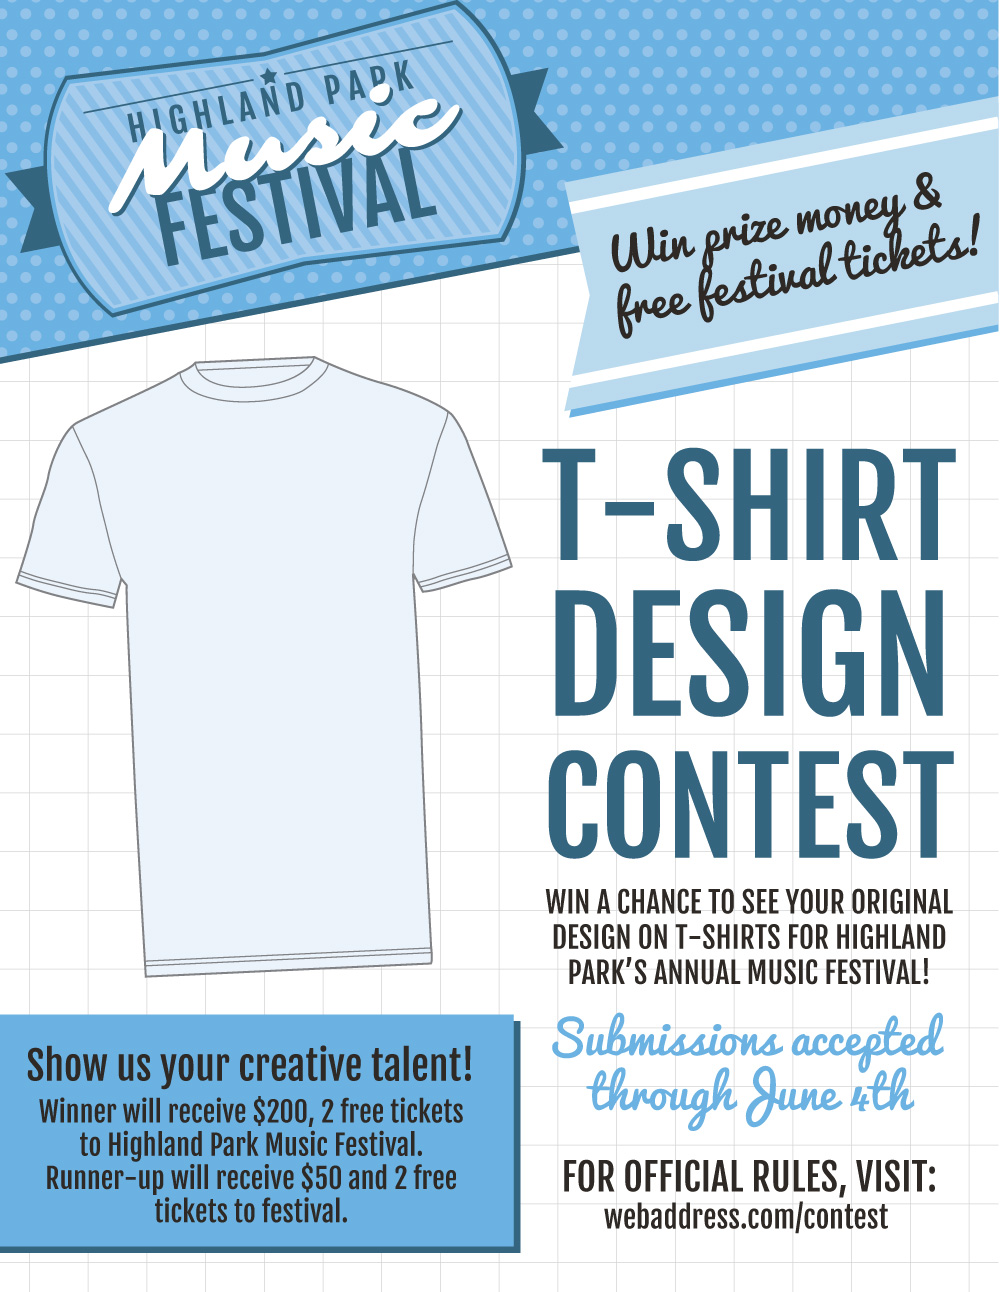 New TShirt Contest Marketing Flier Templates InkSoft